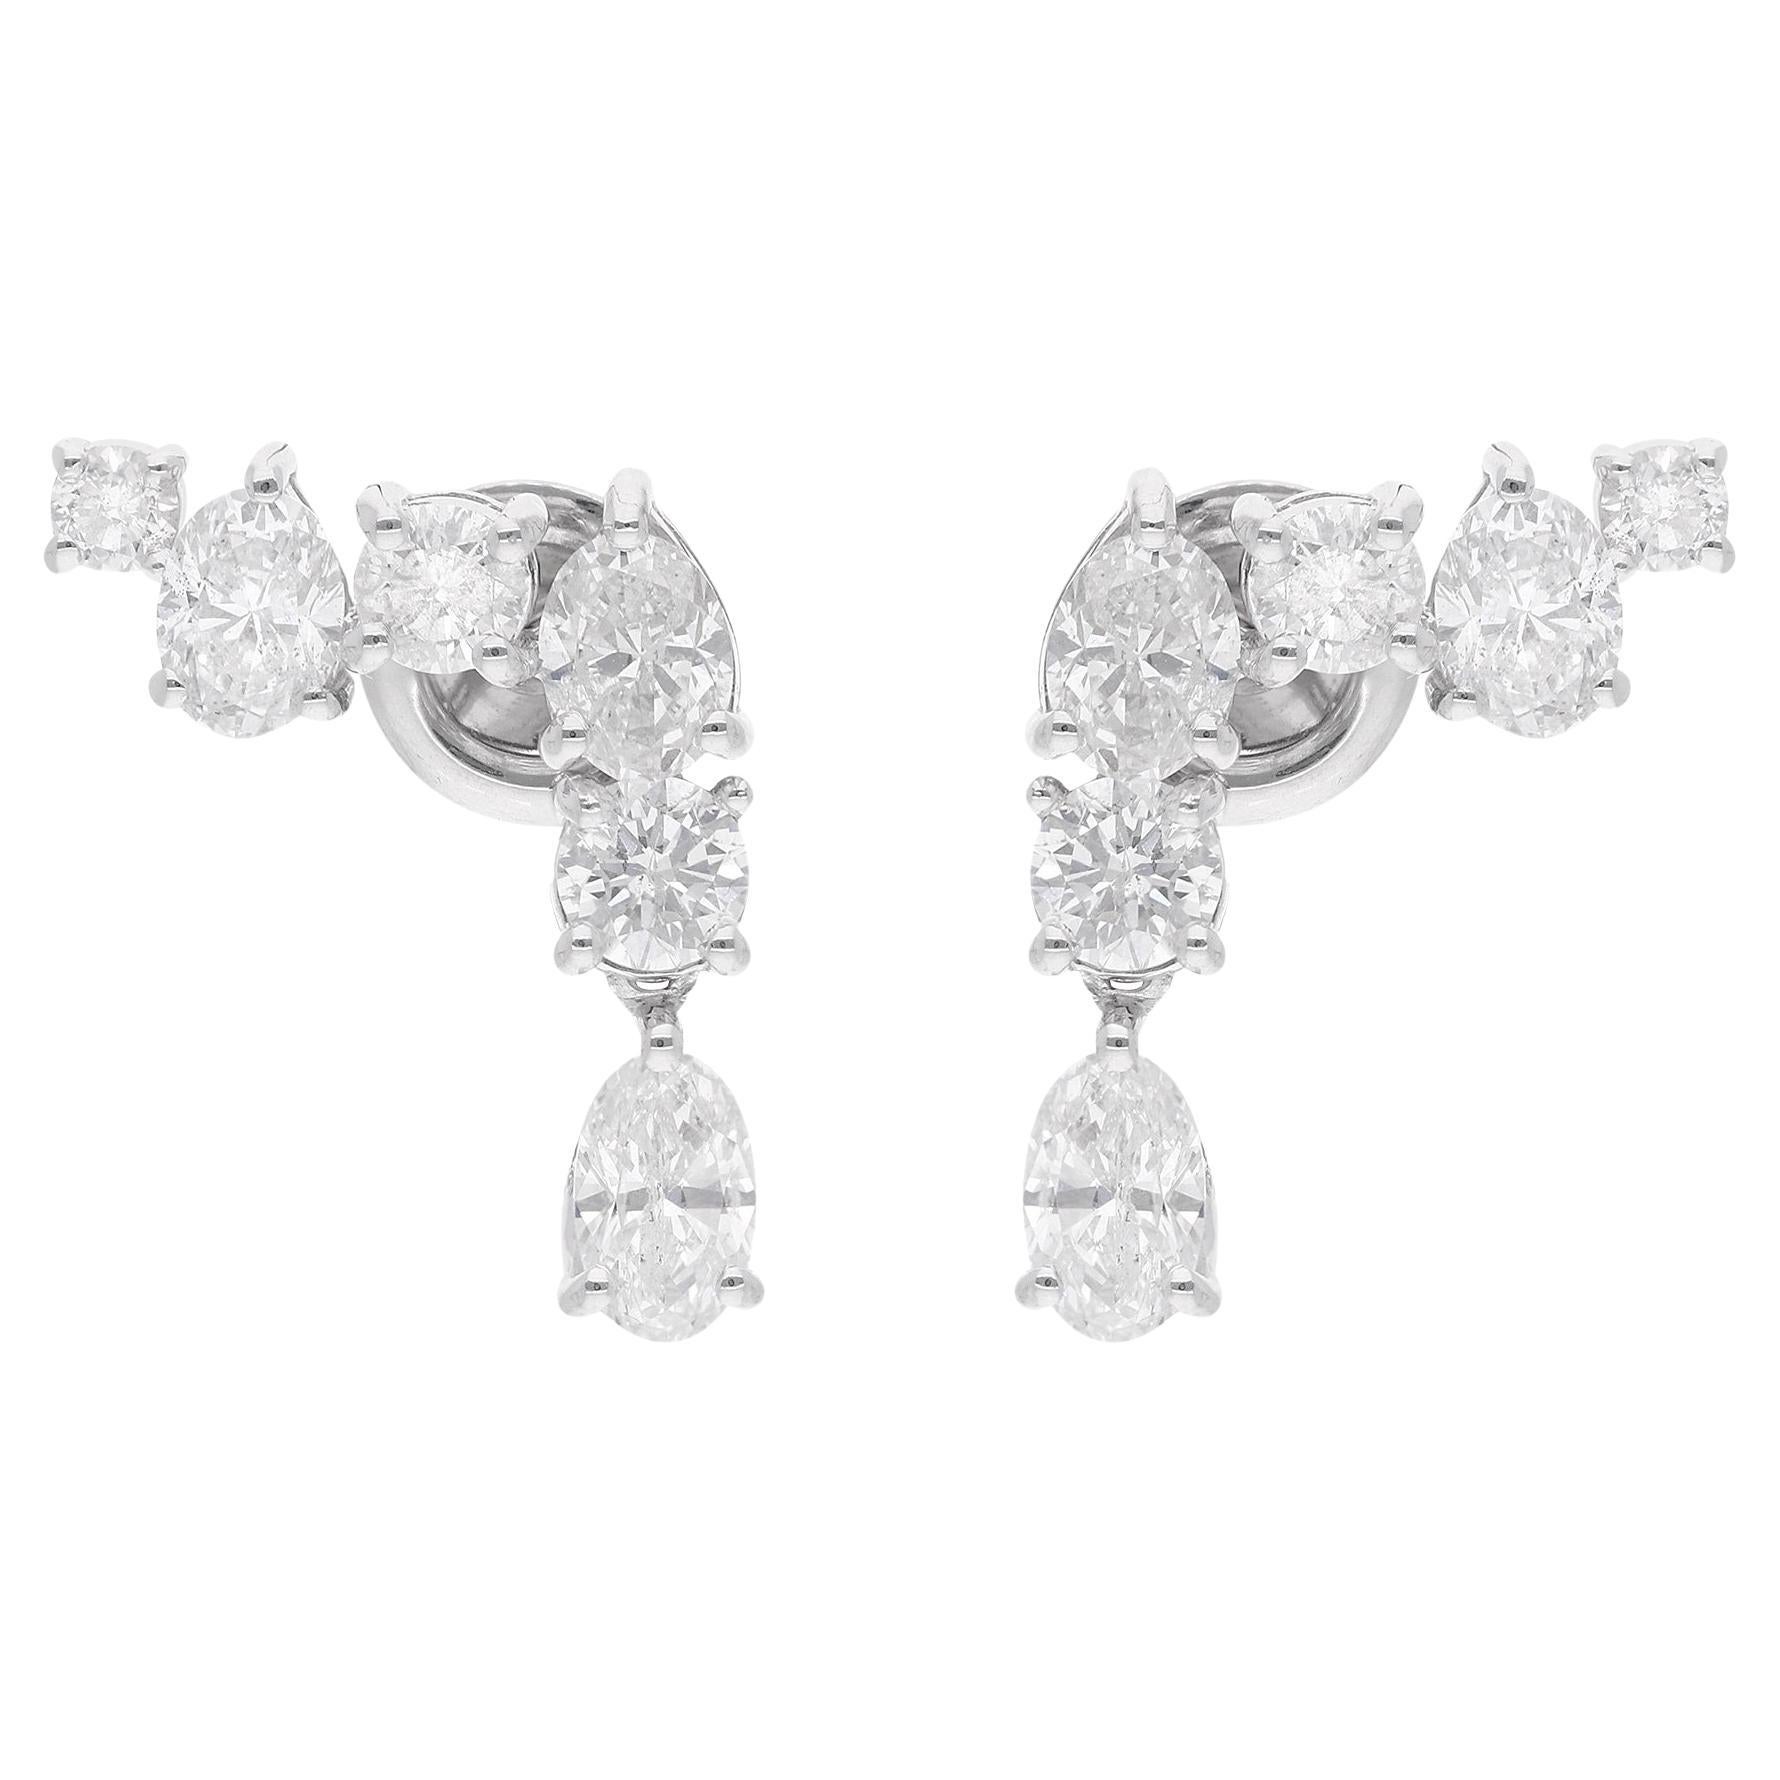 2.83 Carat Oval & Round Diamond Earrings 14 Karat White Gold Handmade Jewelry For Sale